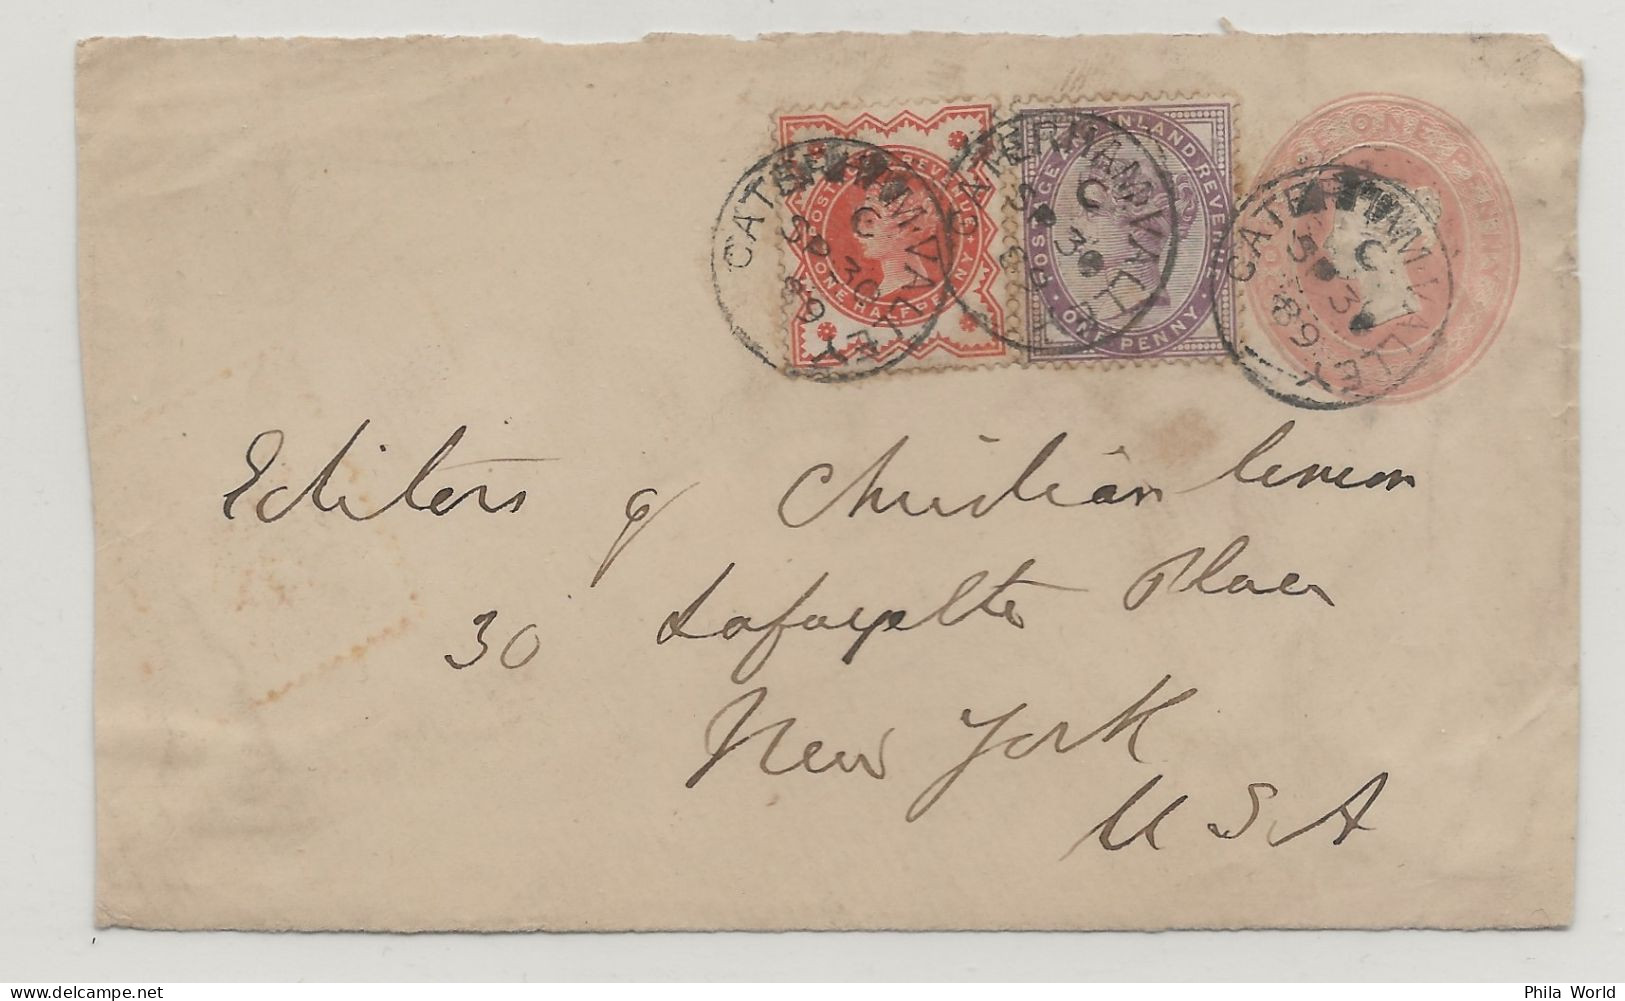 Devant Entier Postal EP GRANDE BRETAGNE Front Side Postal Stationery GREAT BRITAIN 1895 CATERHAM VALLEY > USA New York - Lettres & Documents